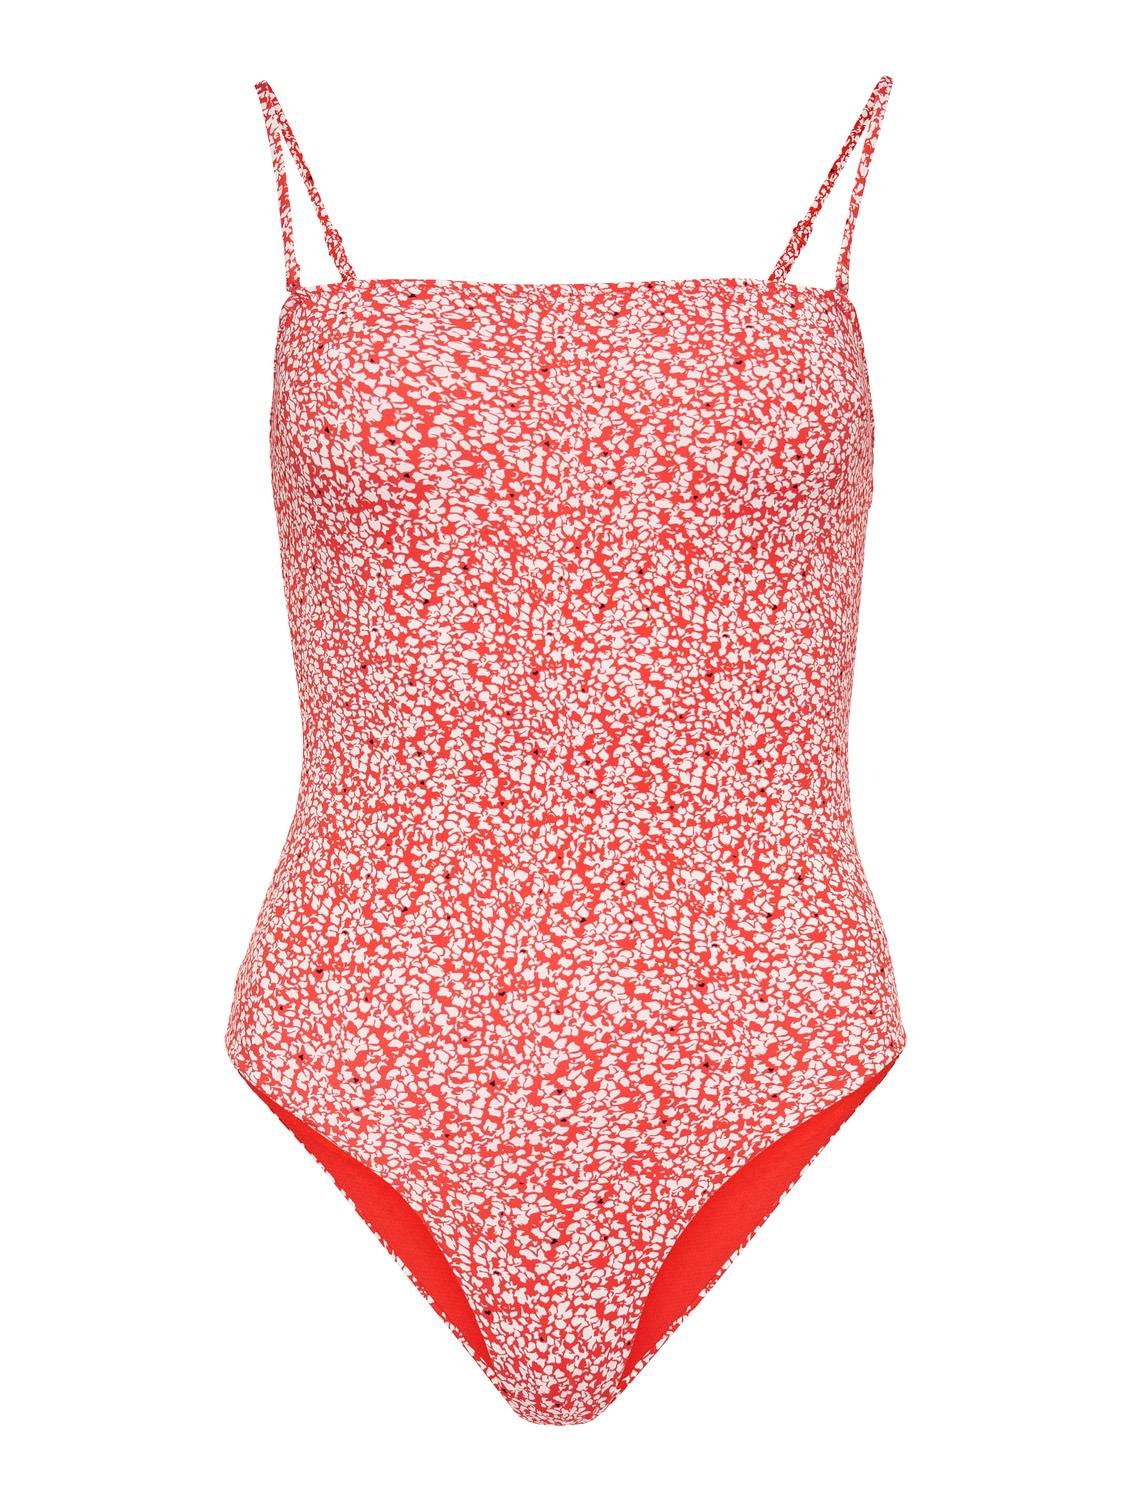 ONLY High waist Adjustable shoulder straps Swimwear -Cherry Tomato - 15250853